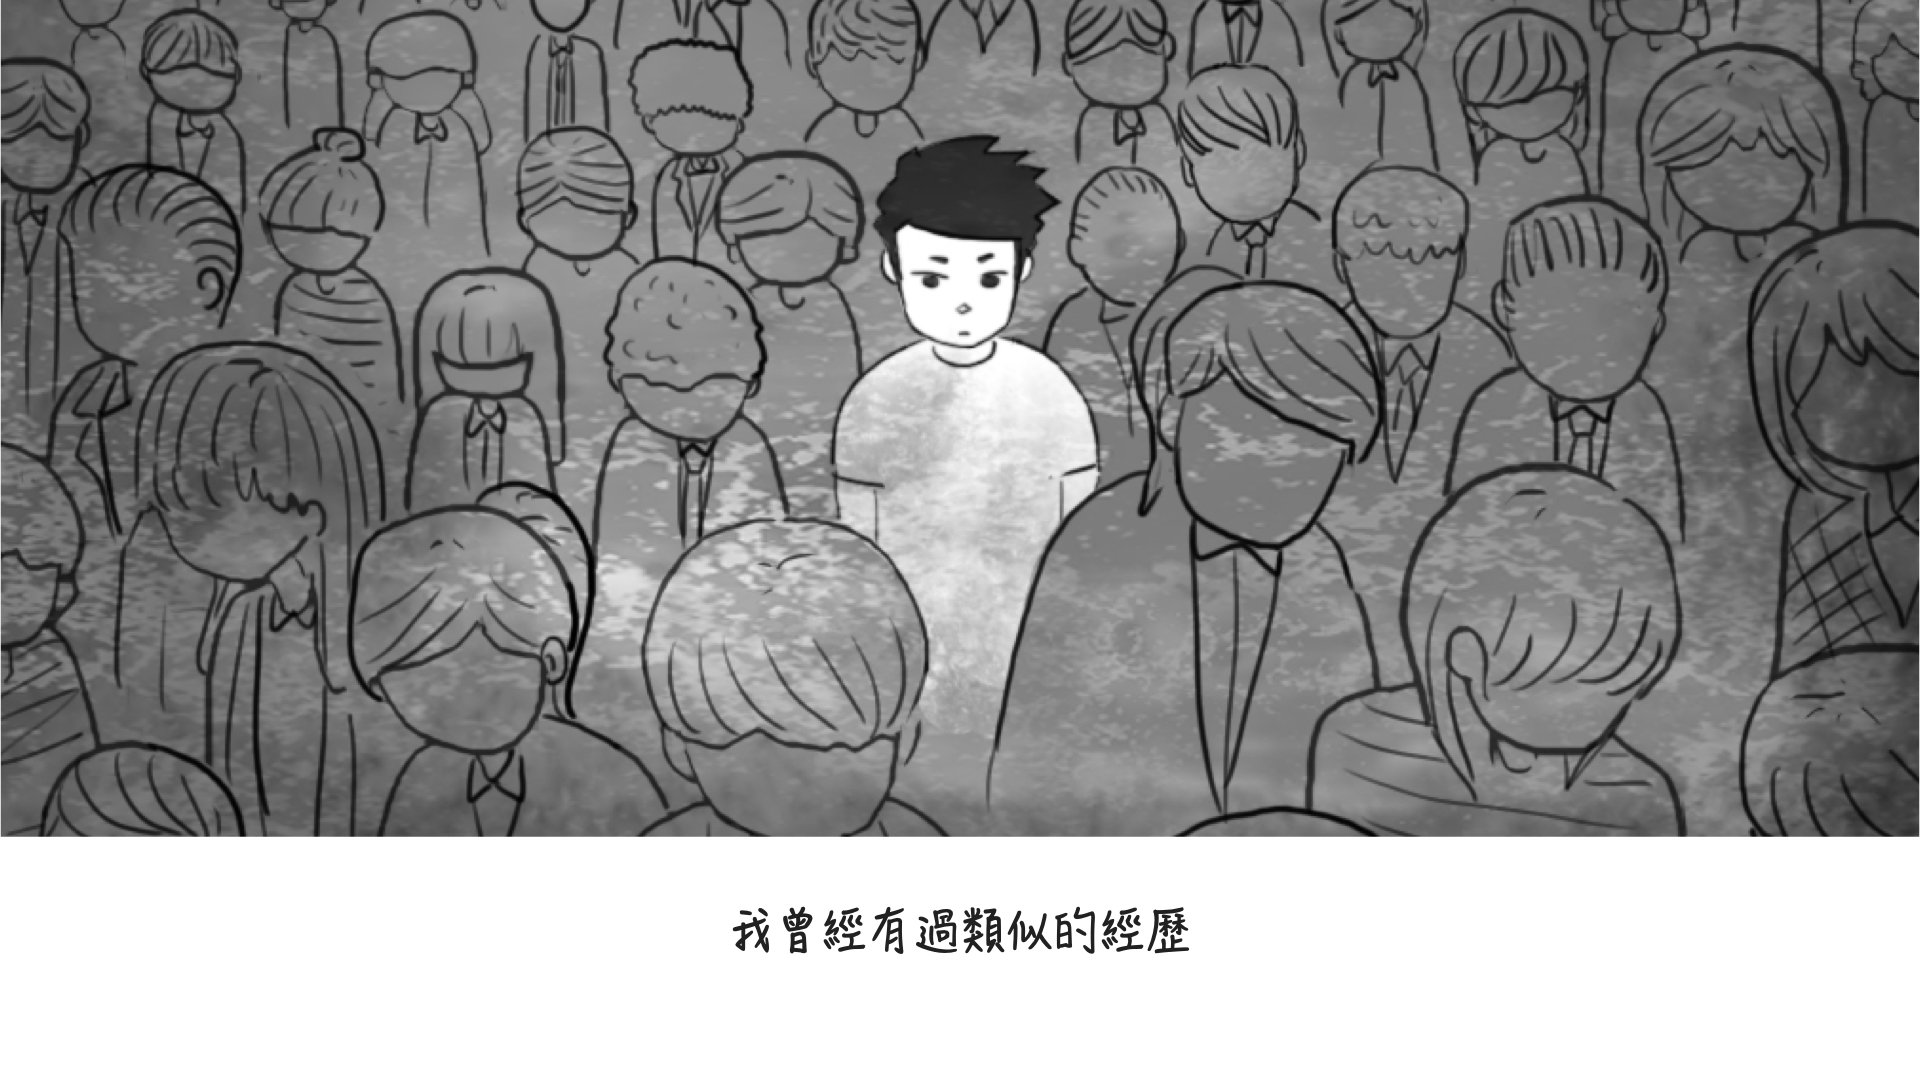 PP_Comic_Chinese_TW.015.jpeg